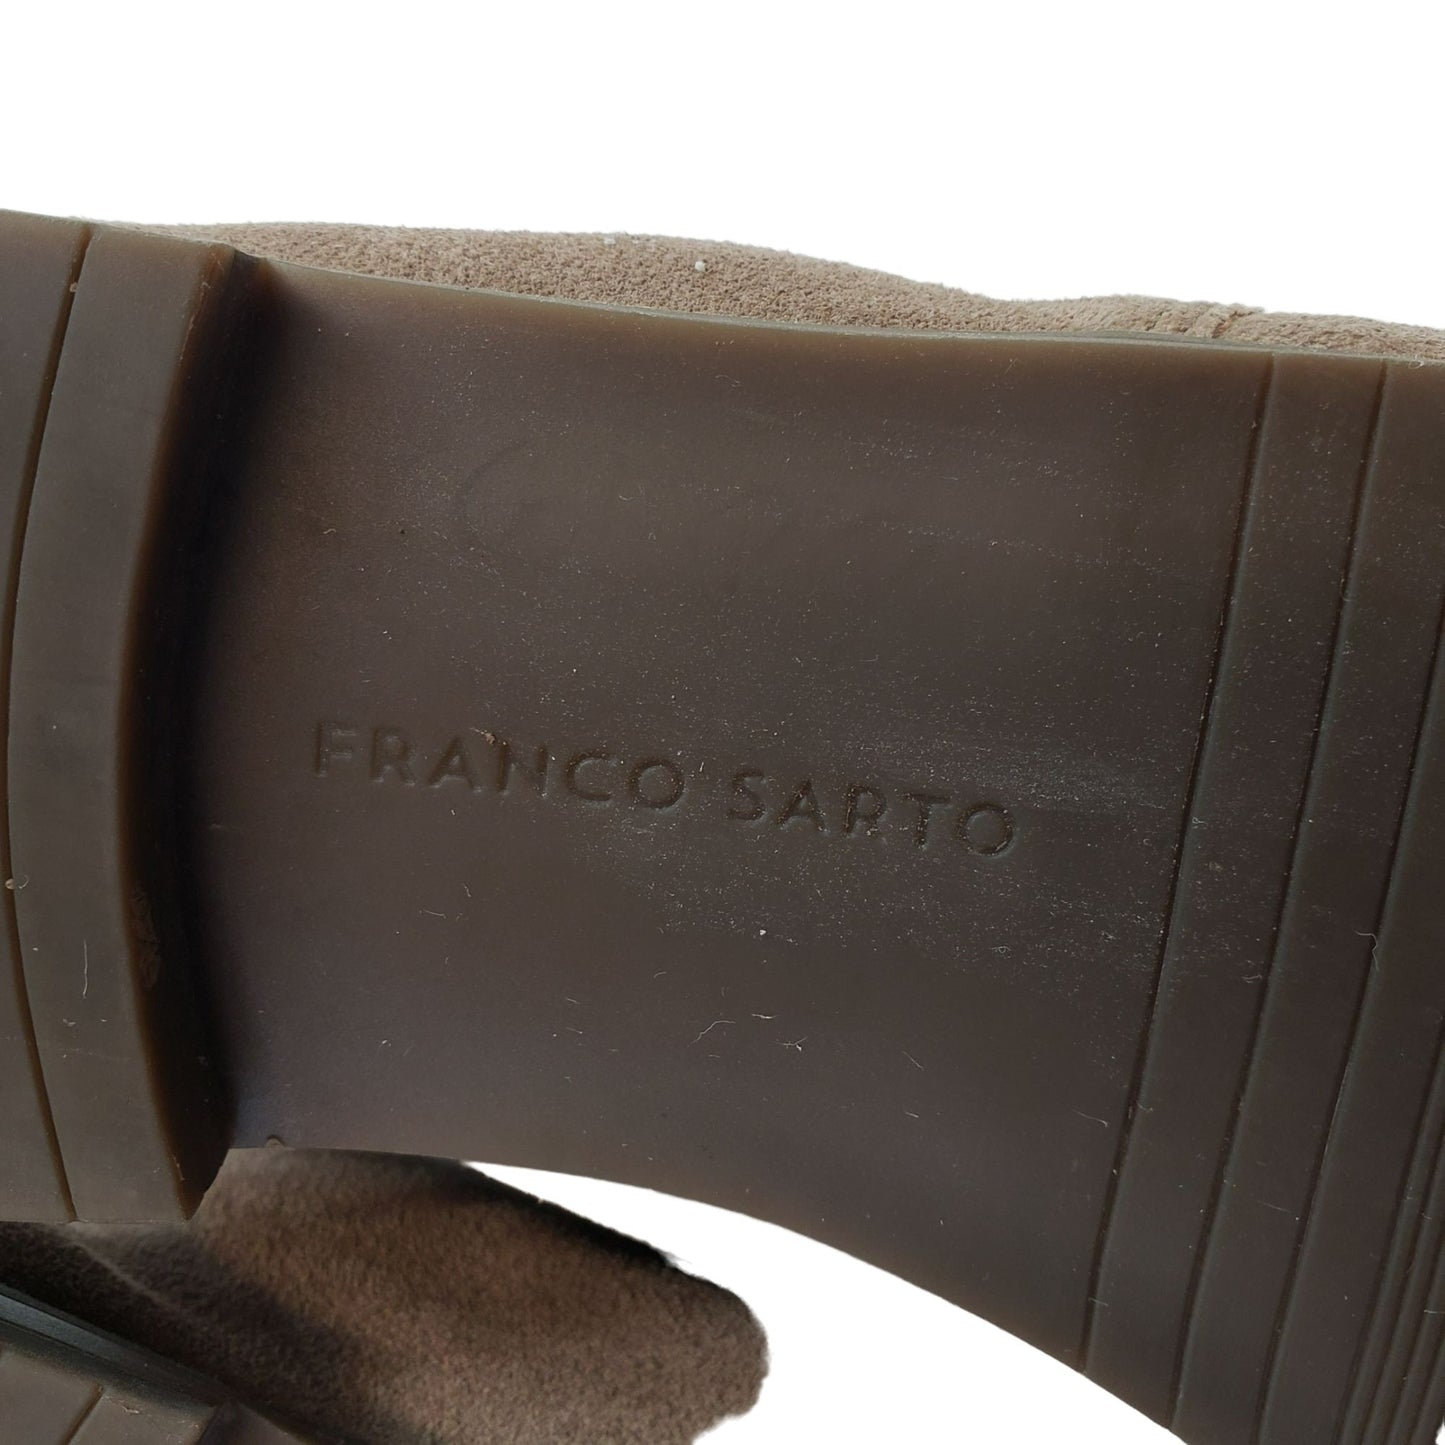 Franco Sarto Pieta Suede Leather Slip-On Shoes Size 8.5